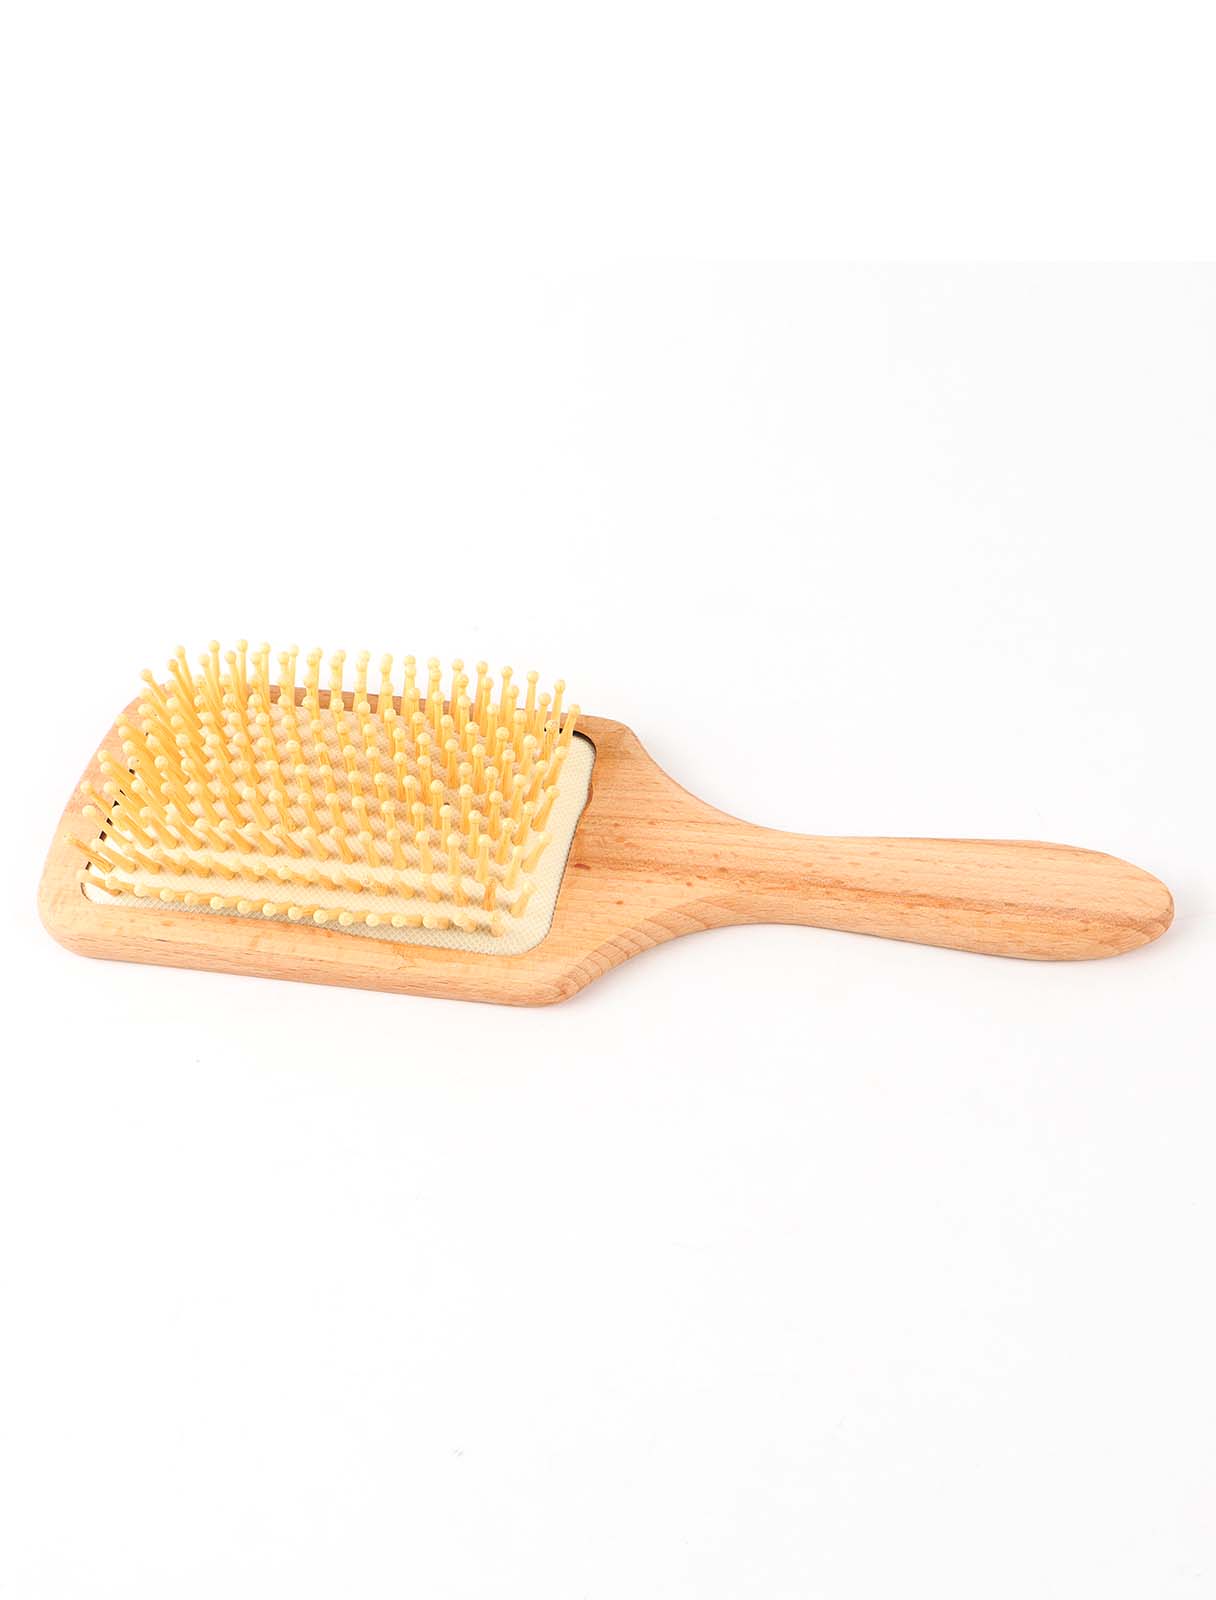 Natural wood hair brush with a rectangular design